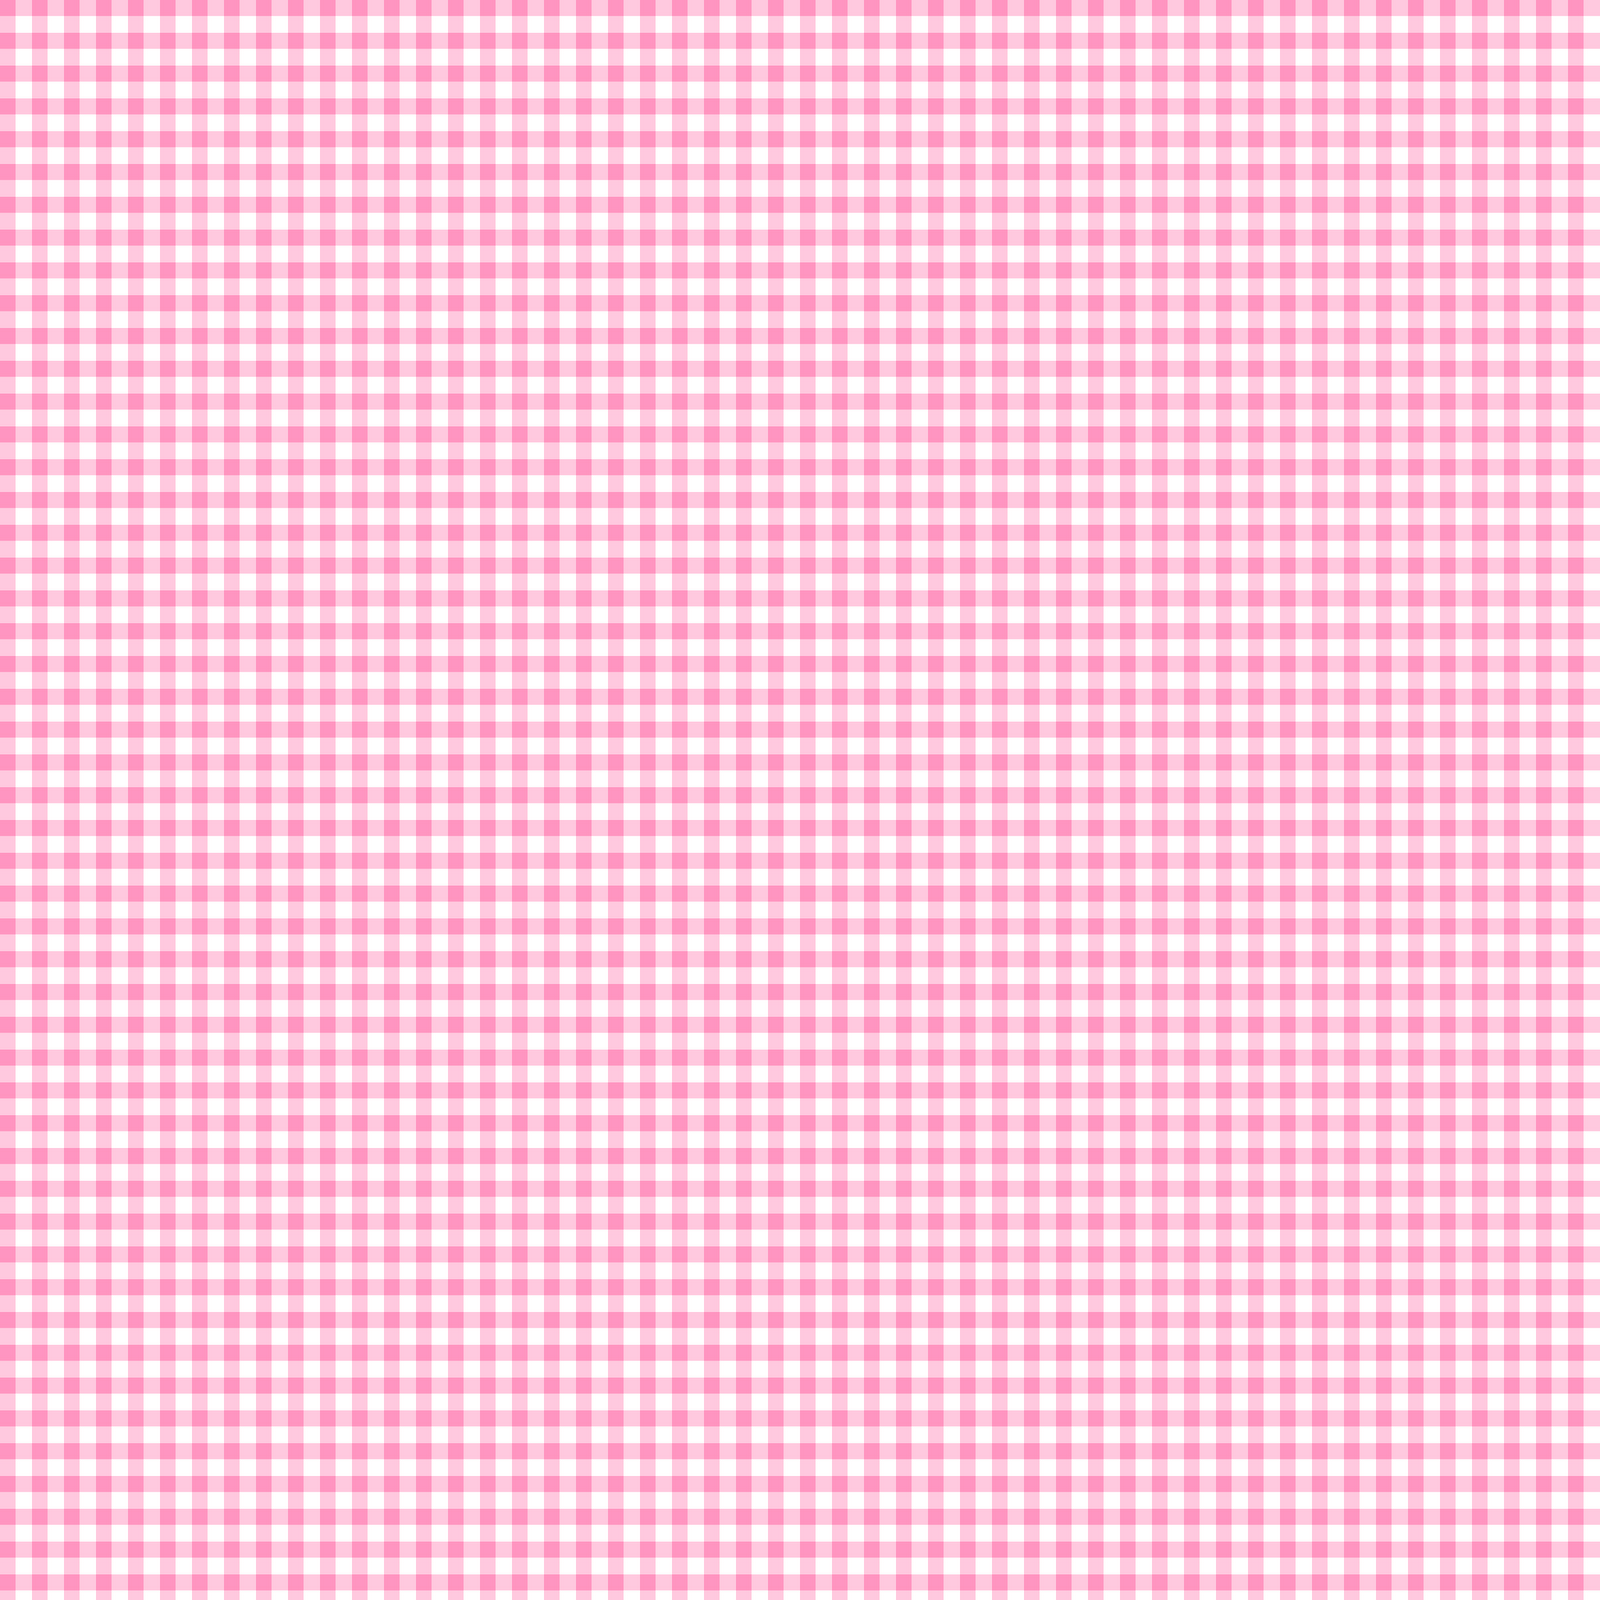 a2 card pink wallpaper pink color 10579422 1024 768 jpg